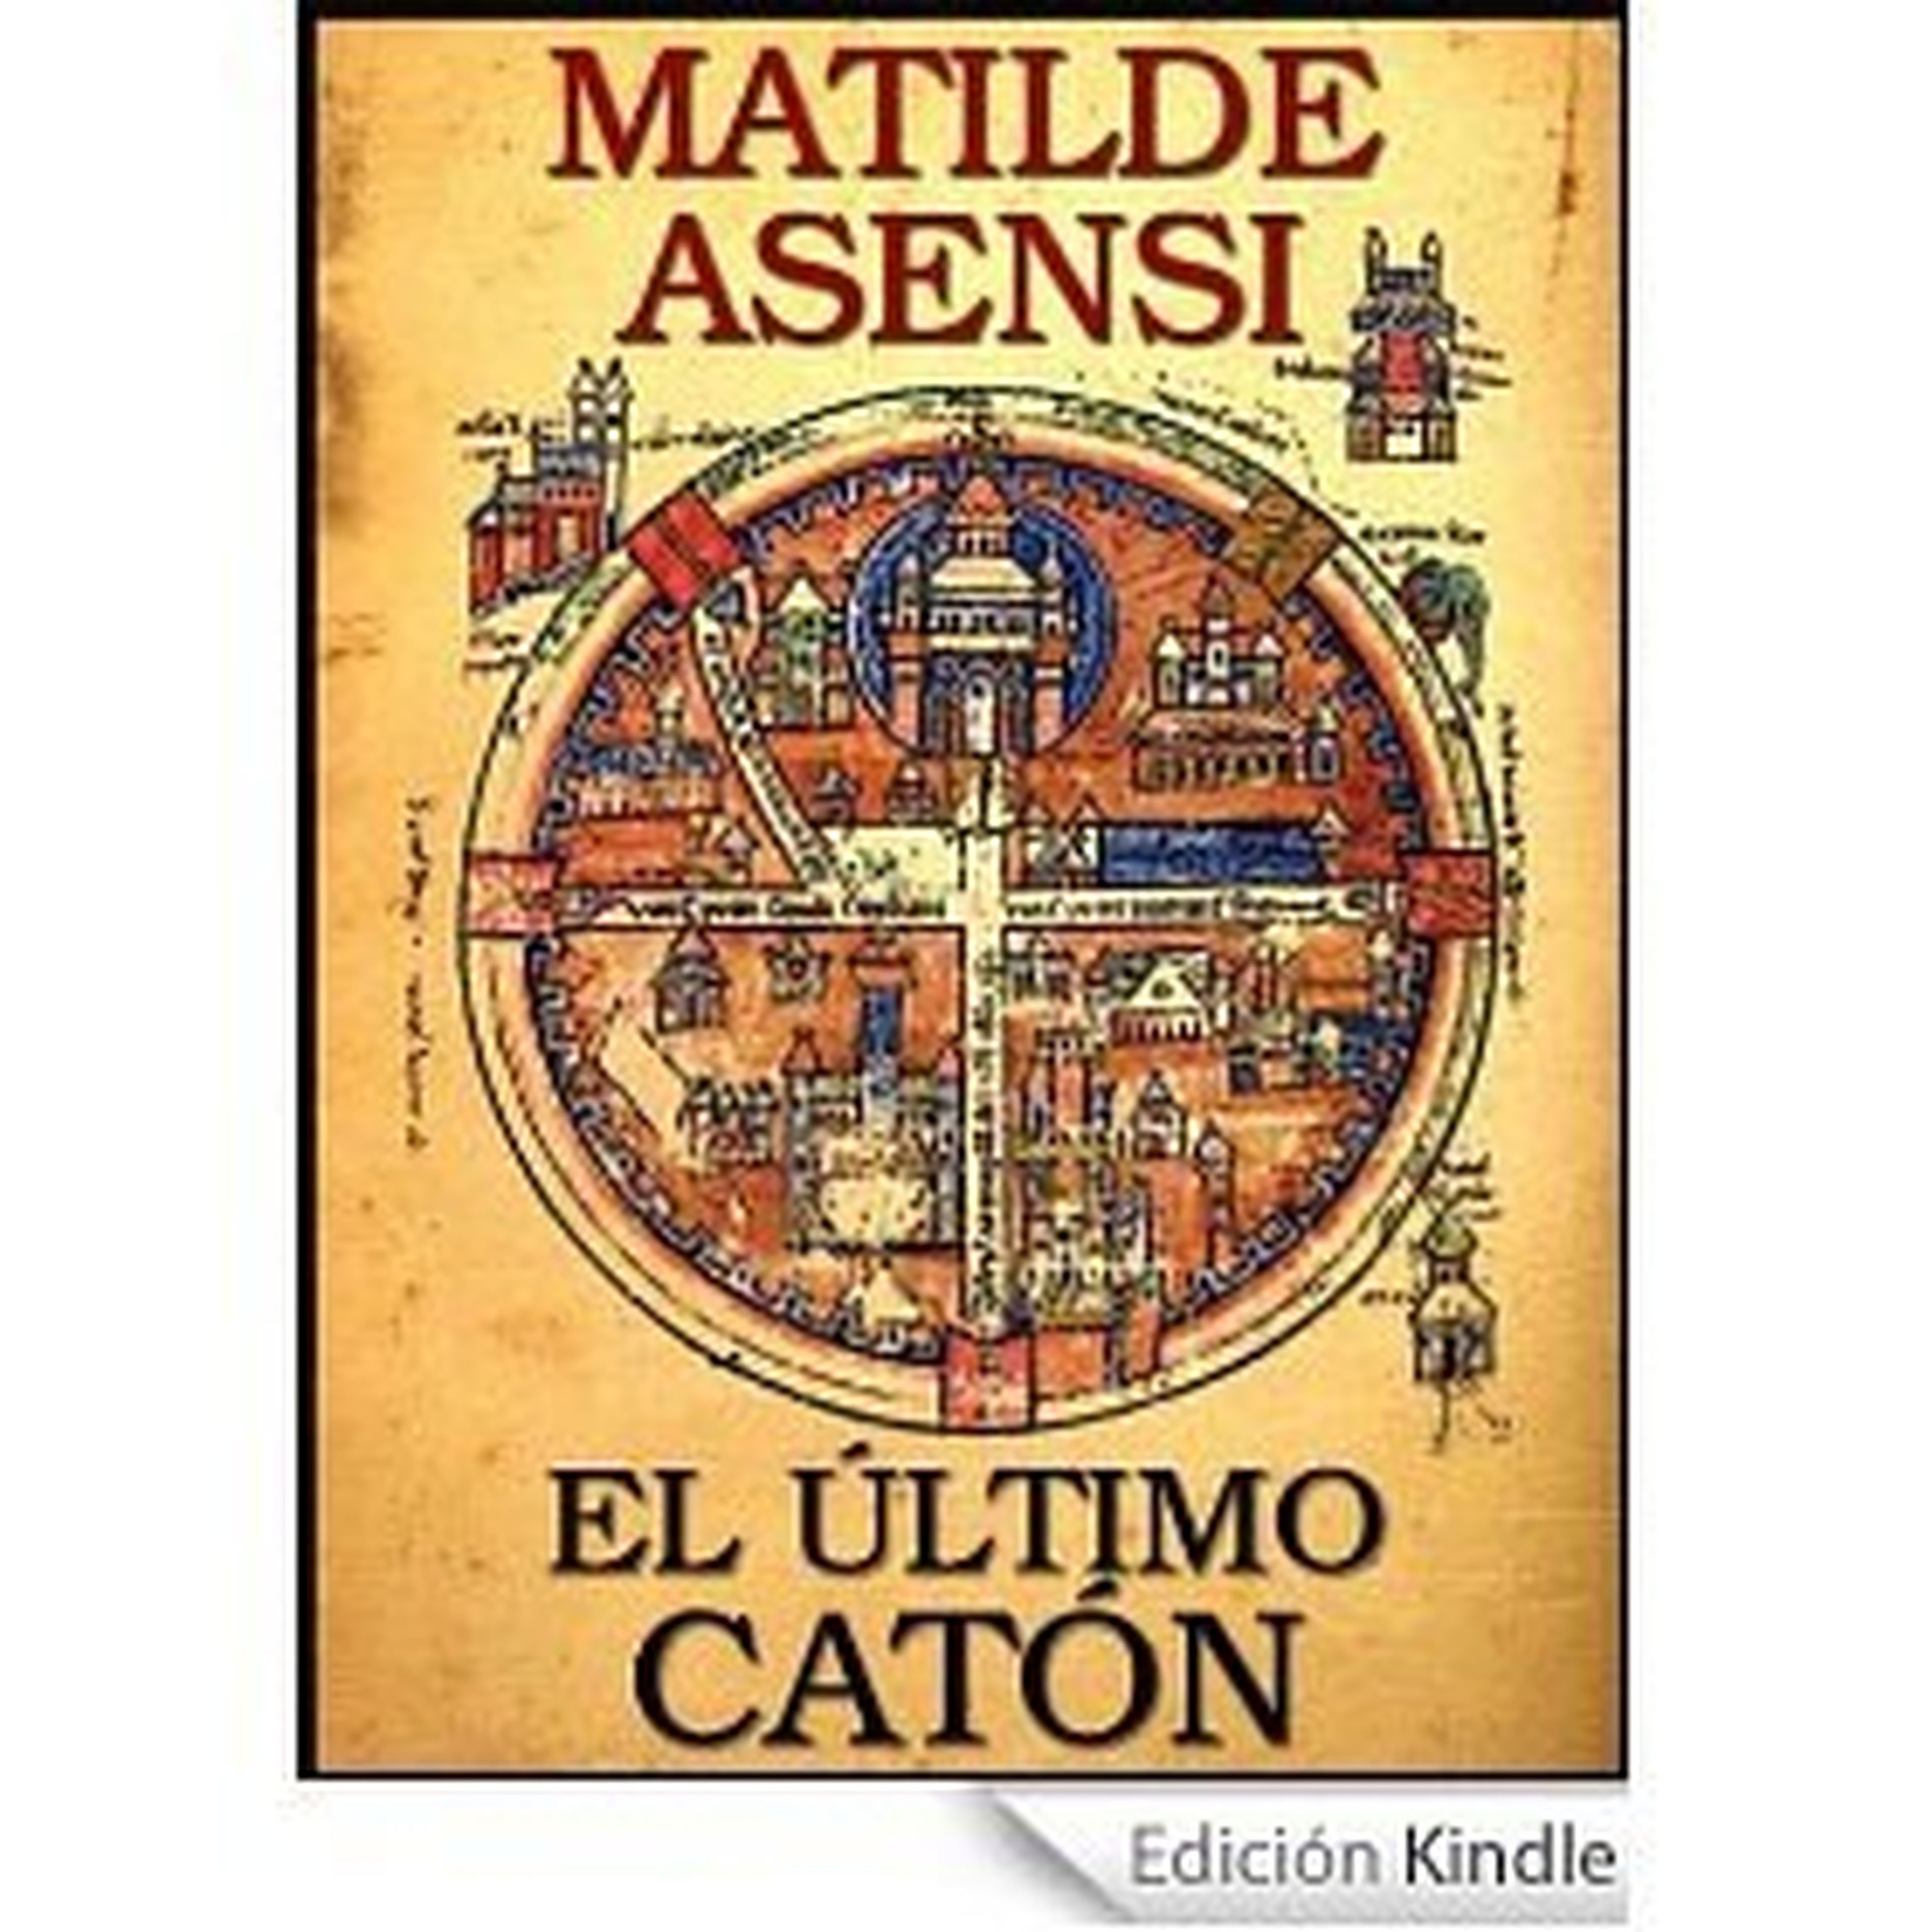 Ebook El Último Catón Matilde Asensi en Amazon Kindle